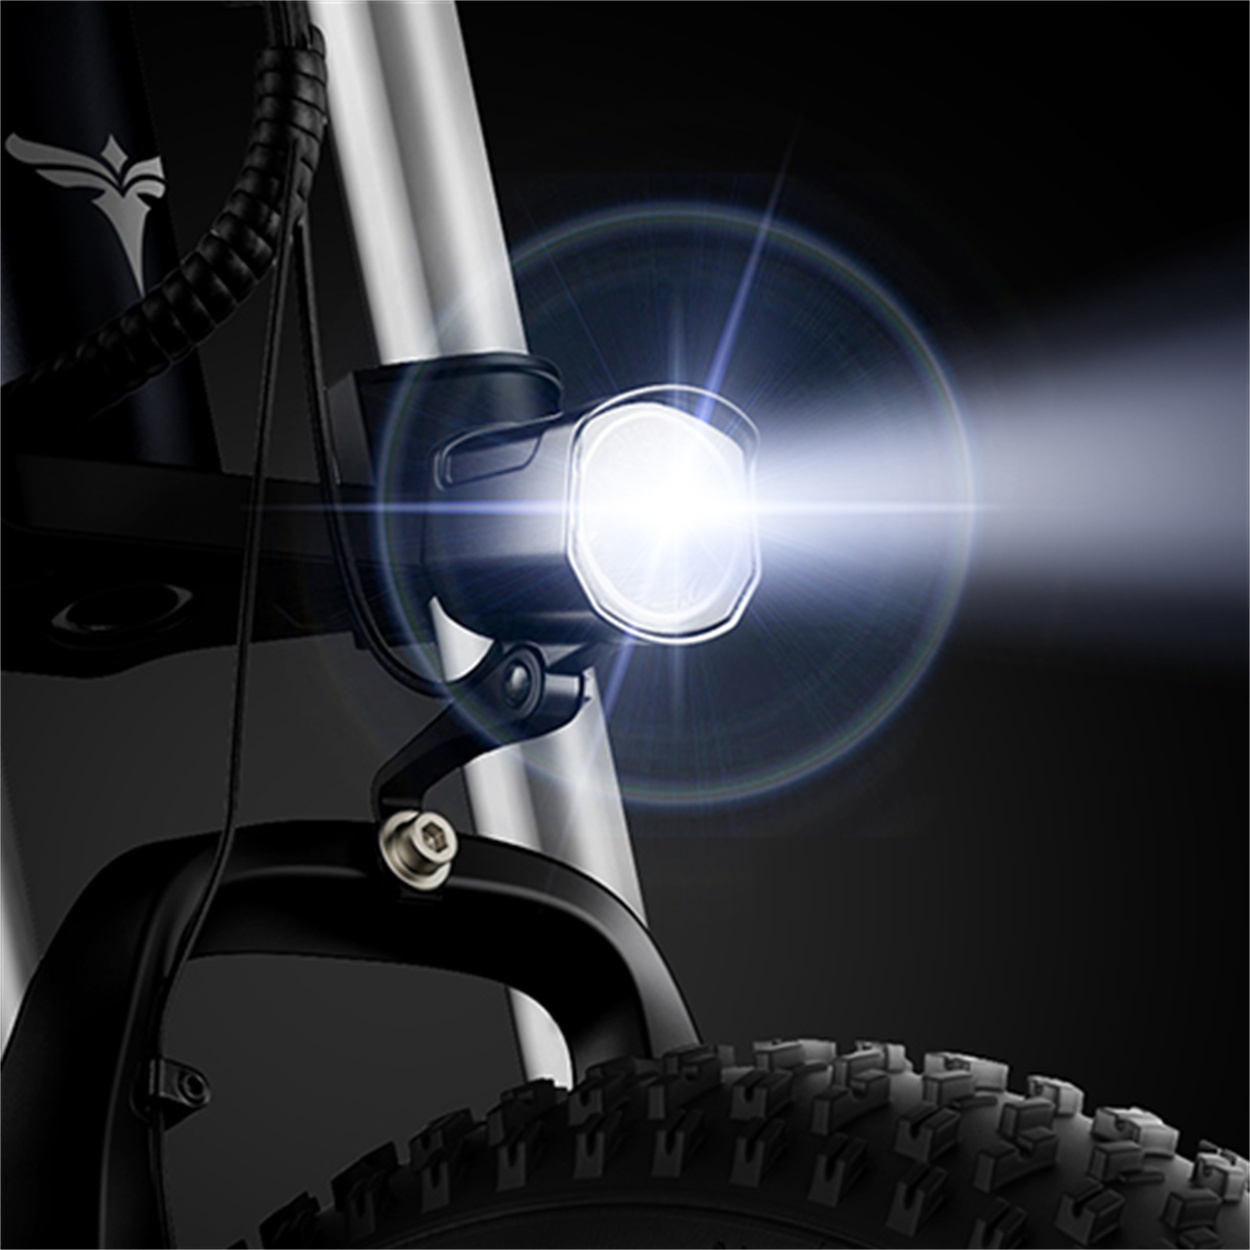 ENGWE X20 E-Motorcycle Unisex-Rad, Terrain (ATB) Bike (Laufradgröße: Zoll, 24 schwarz) All